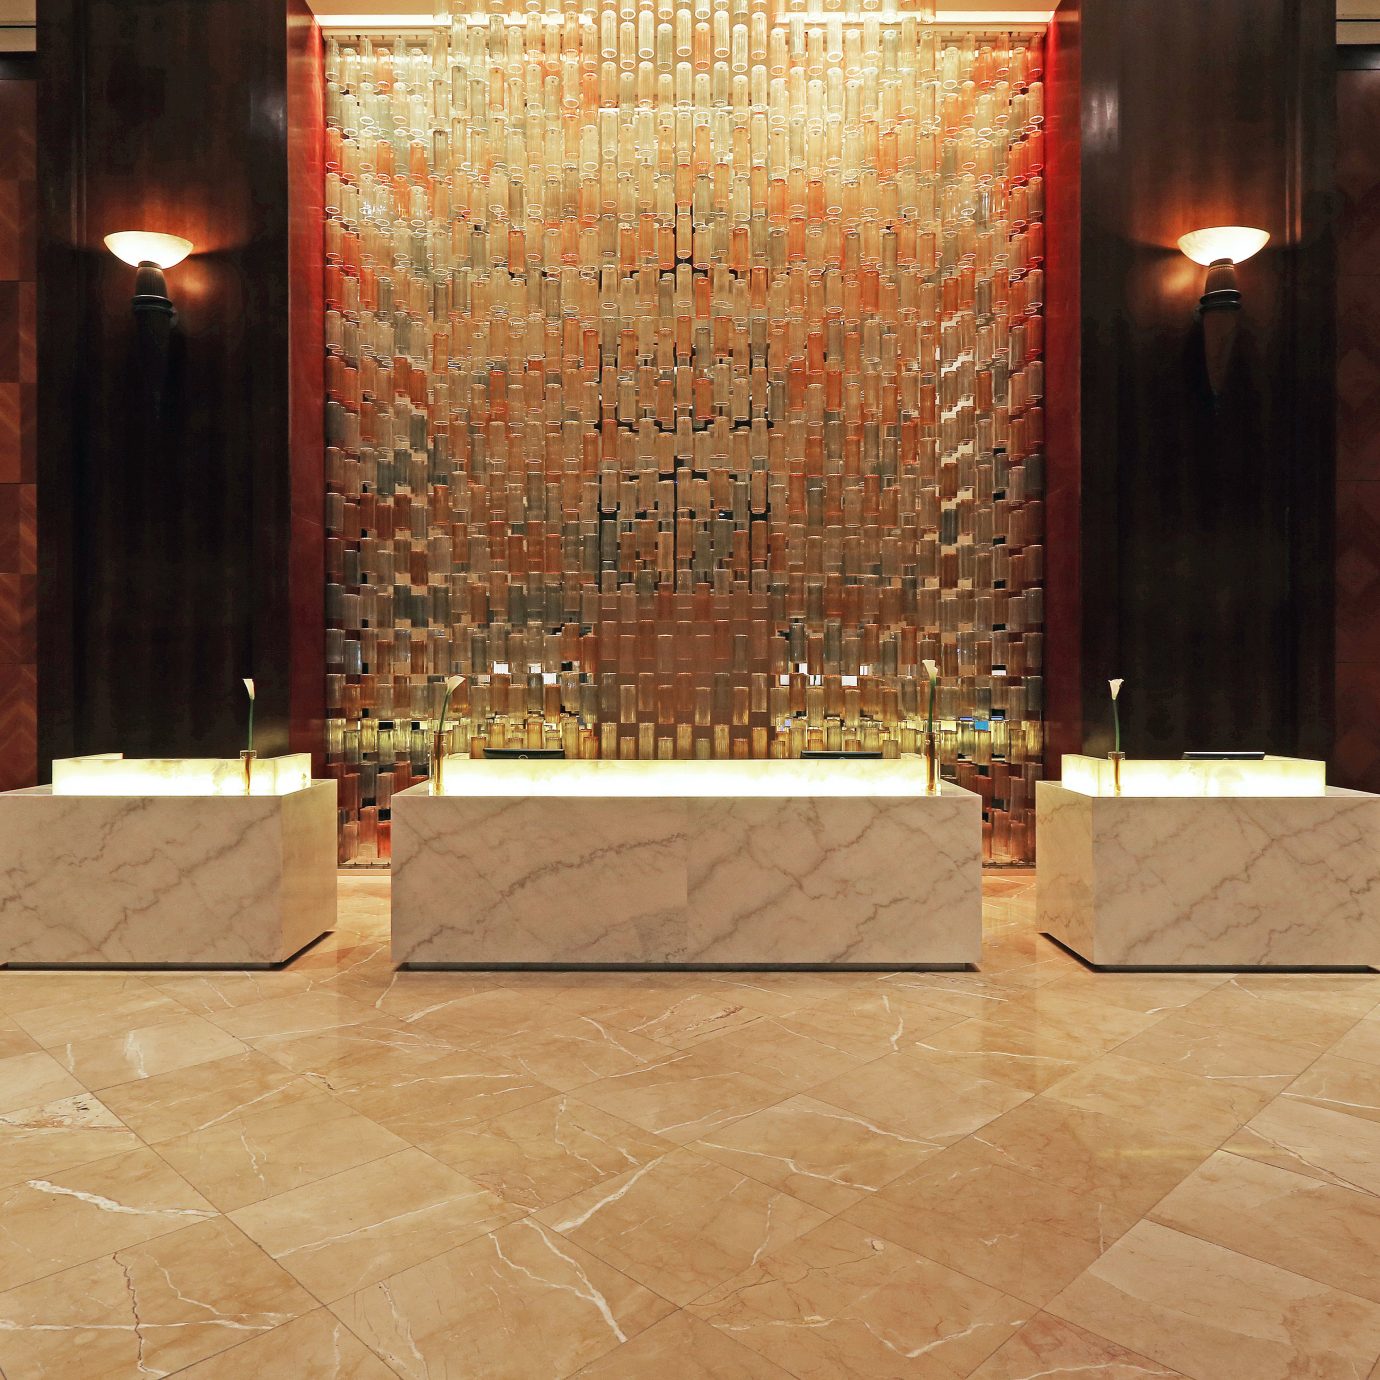 City Classic Resort flooring Lobby building hardwood wood flooring tile laminate flooring material stone